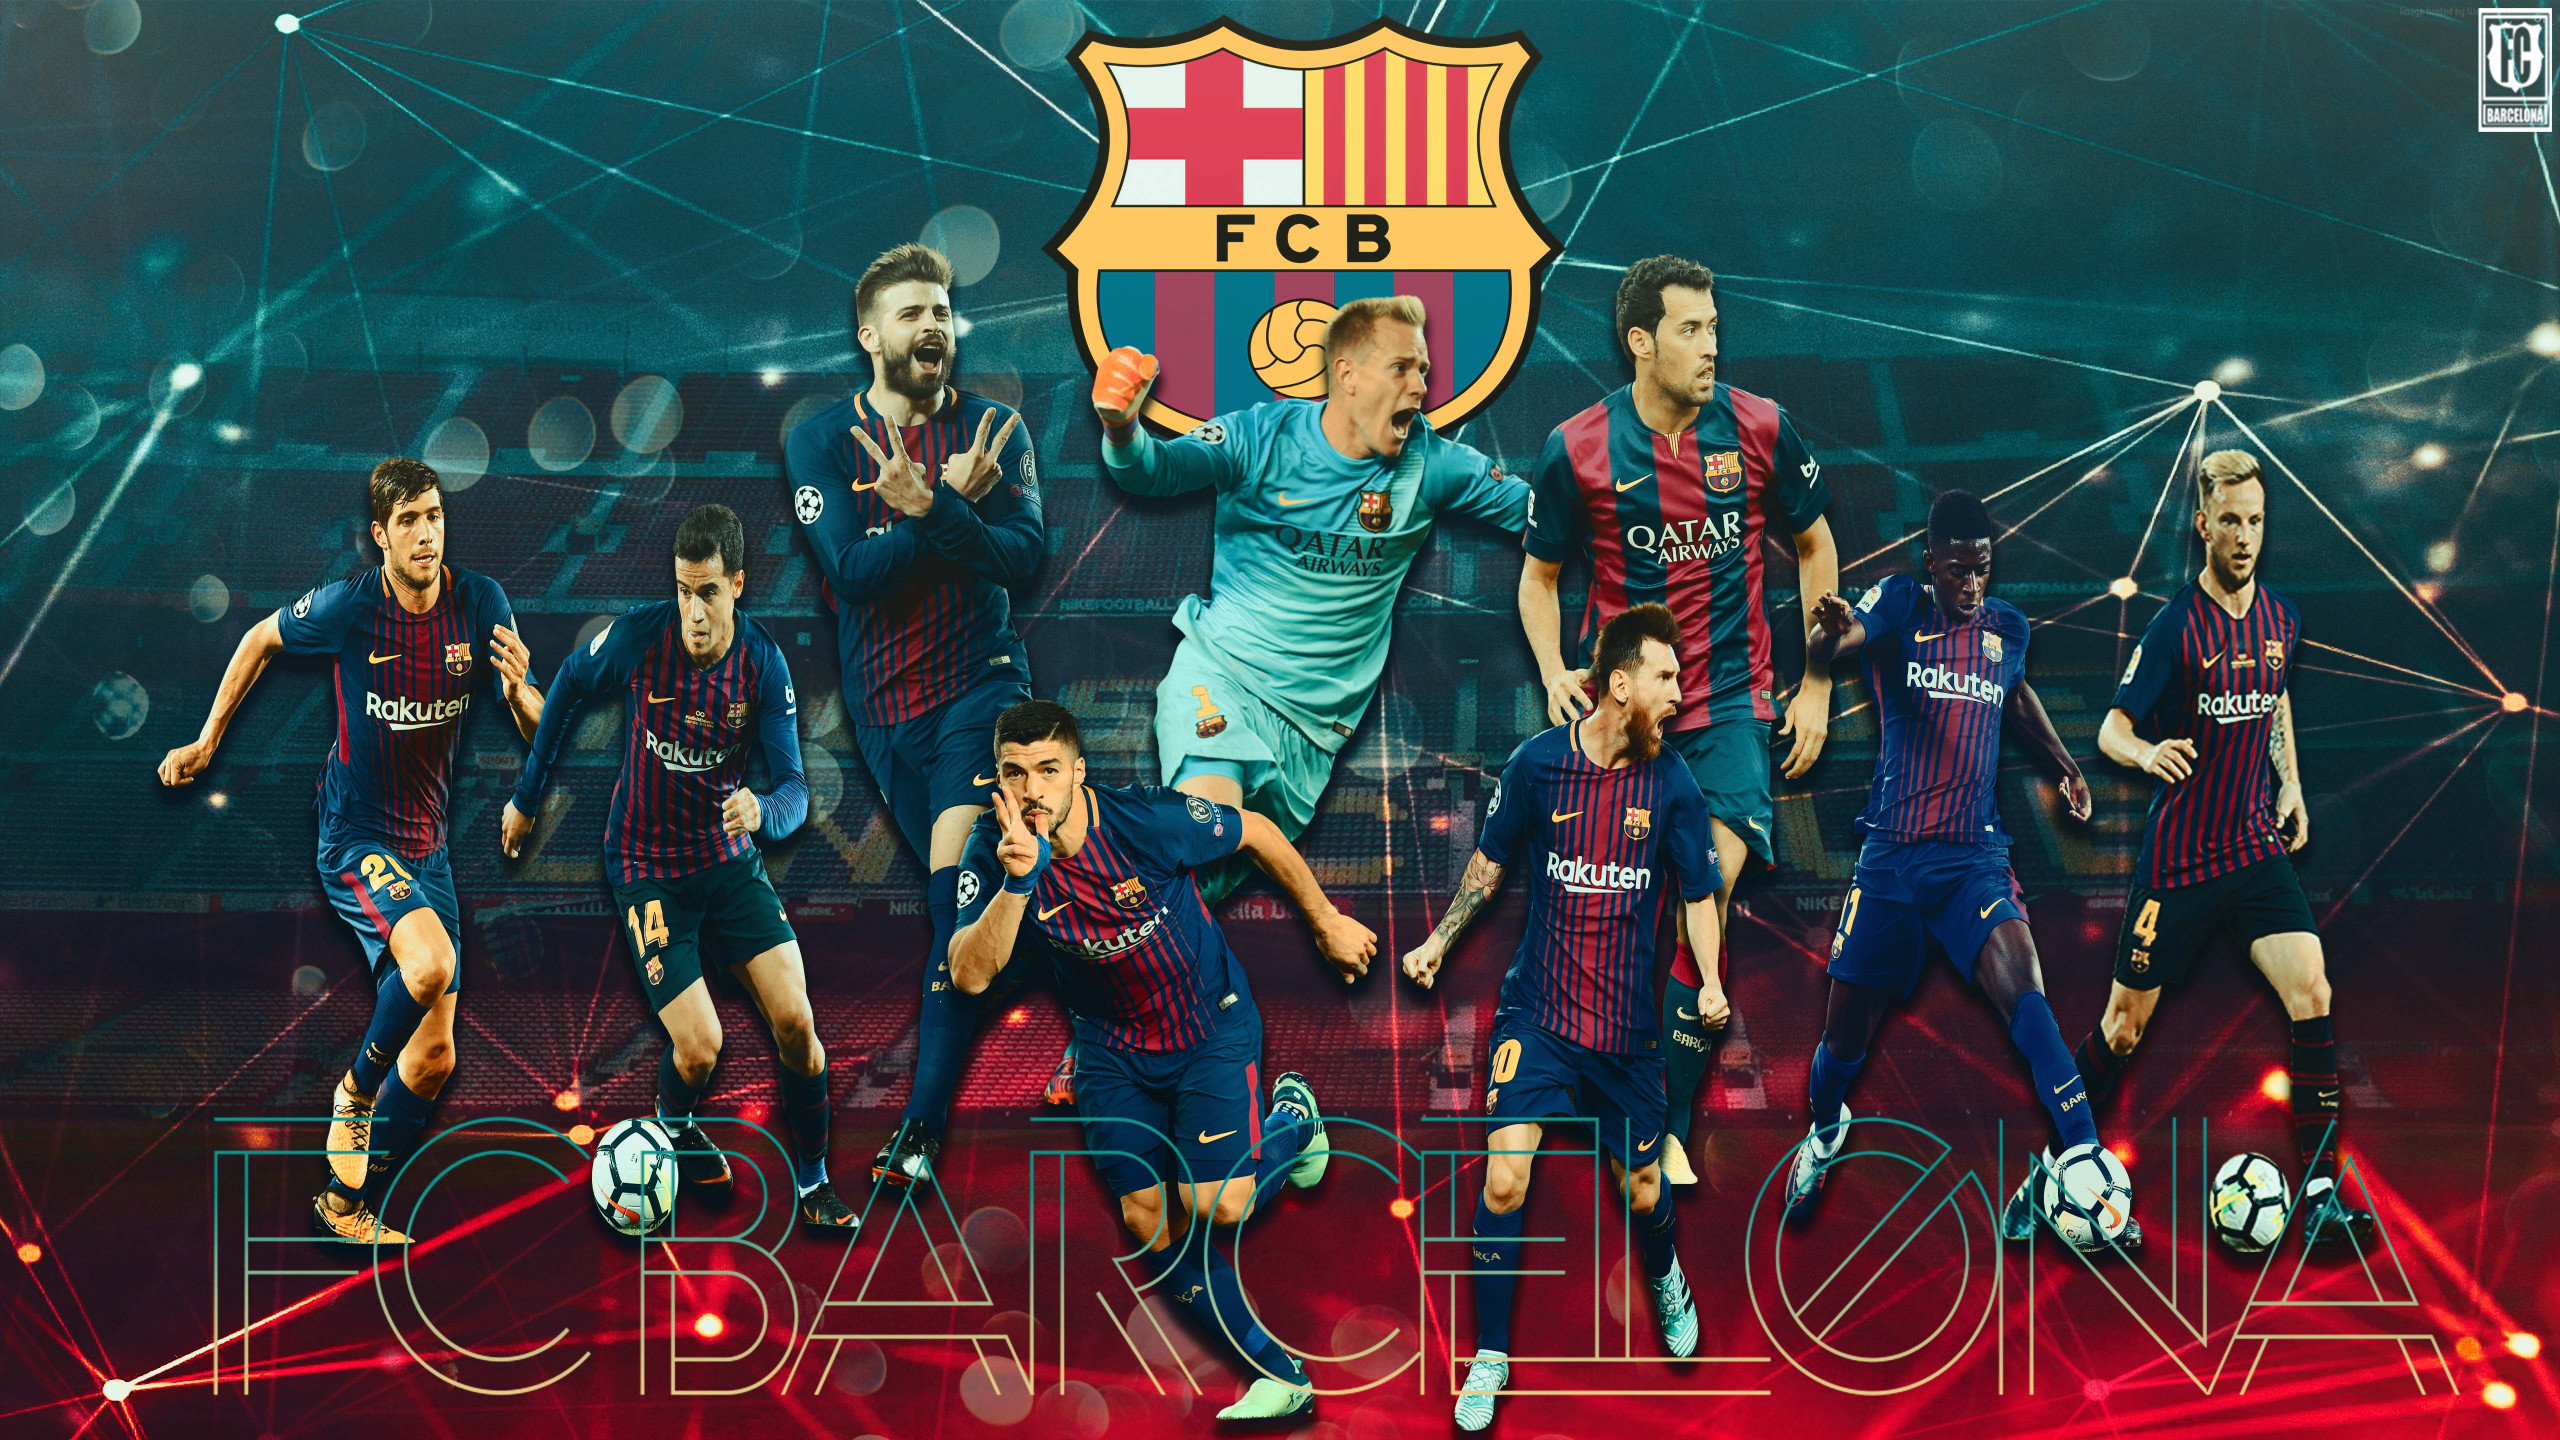 Download wallpaper: FC Barcelona 2560x1440